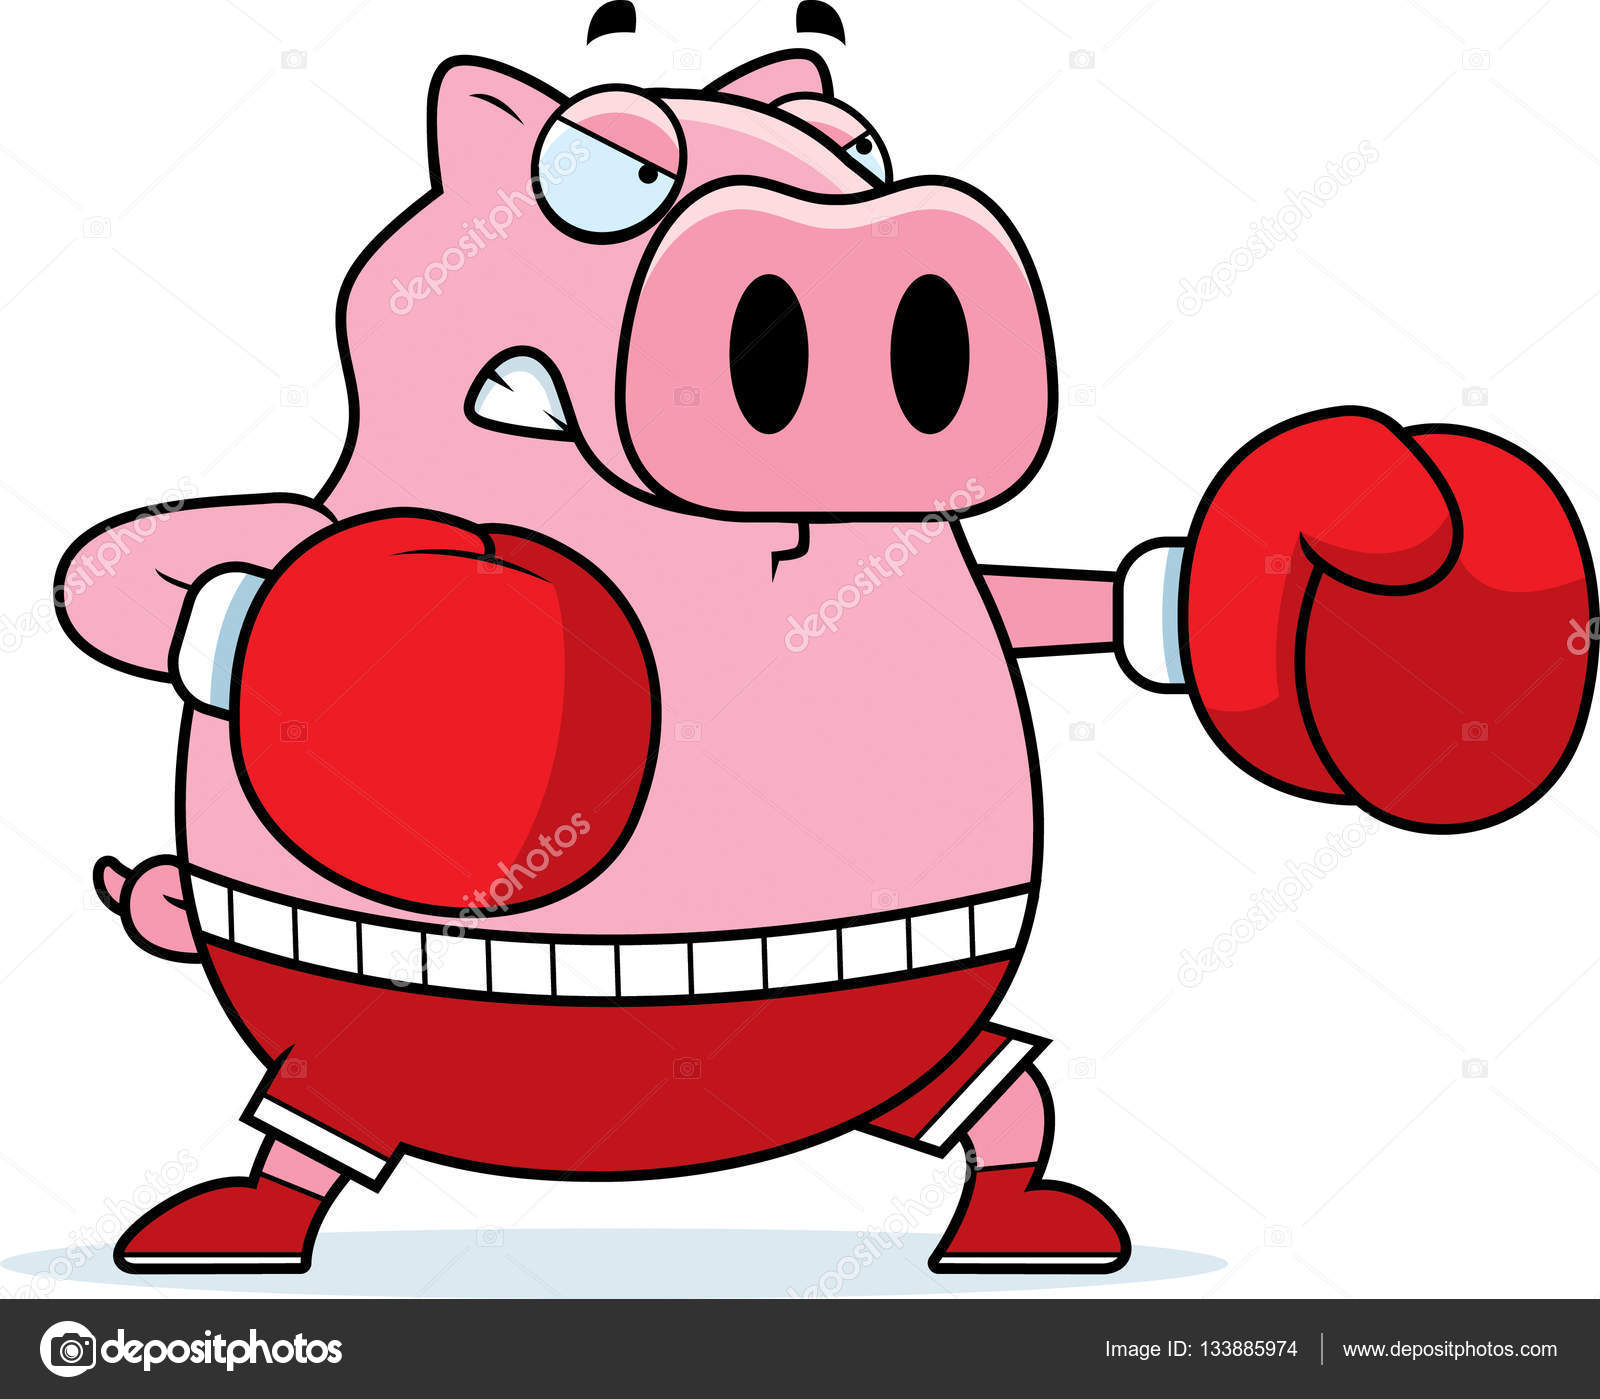 depositphotos_133885974-stock-illustration-cartoon-pig-boxing.jpg